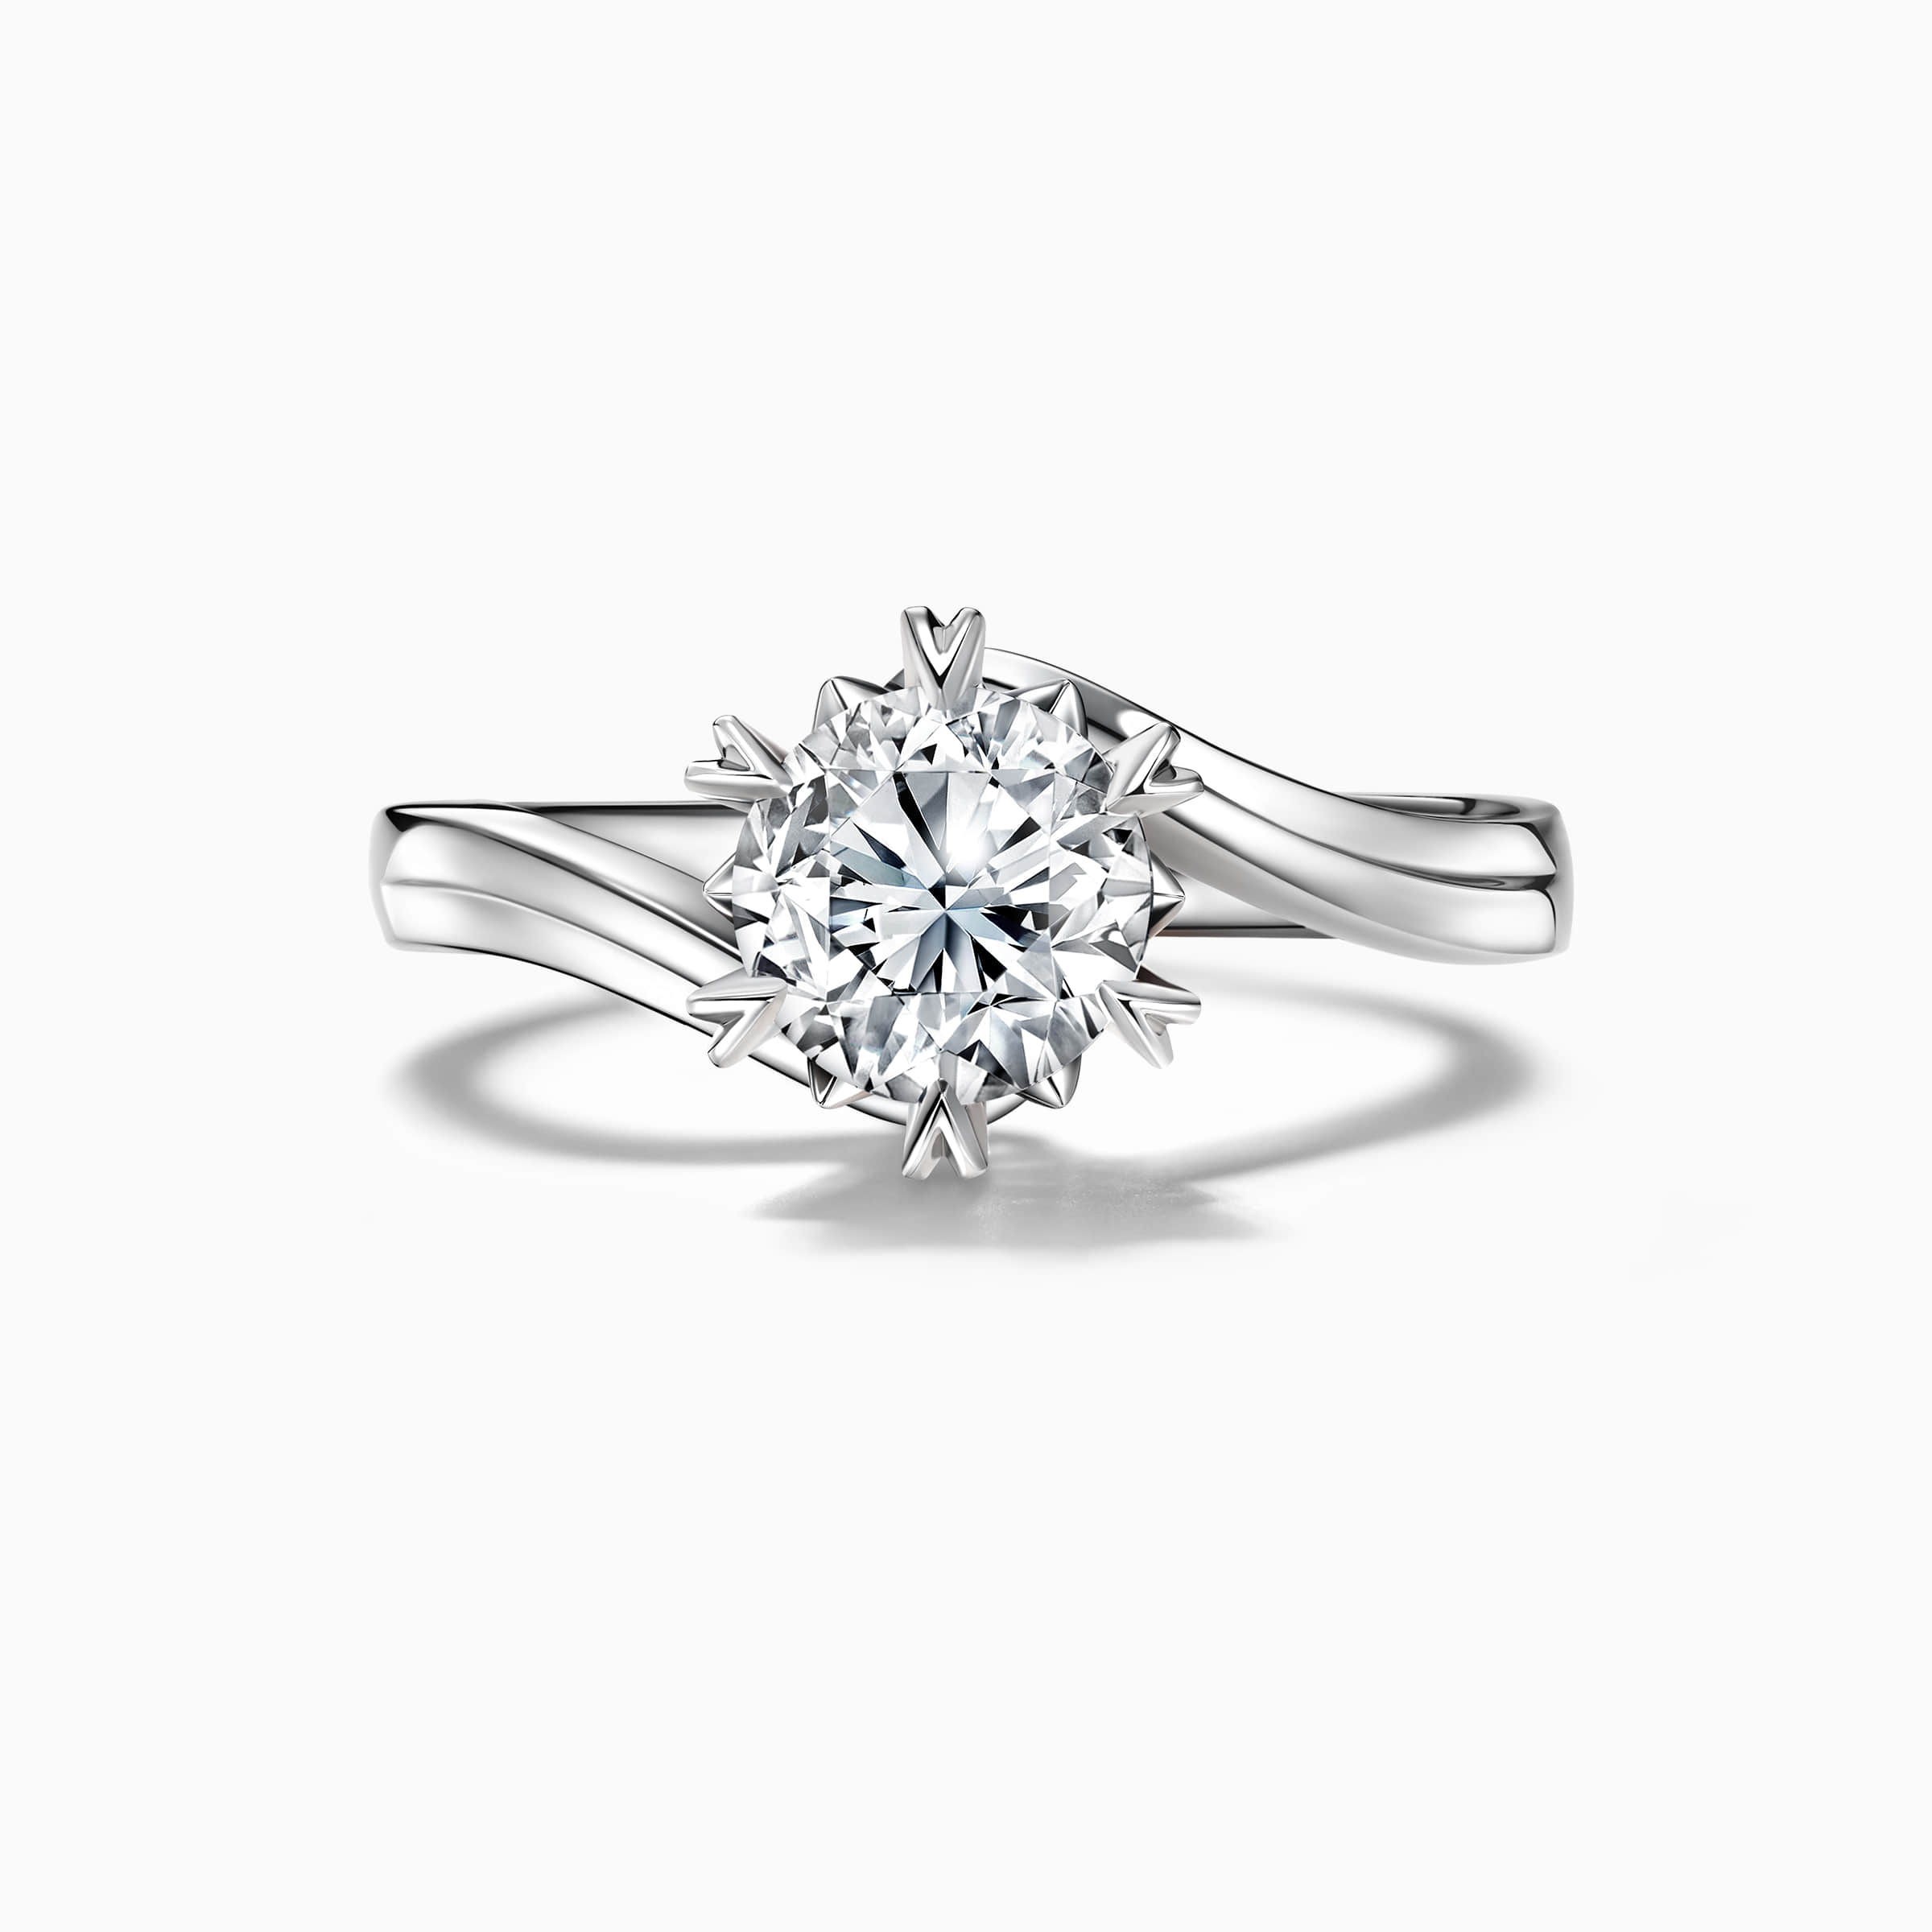 Darry Ring snowflake engagement ring